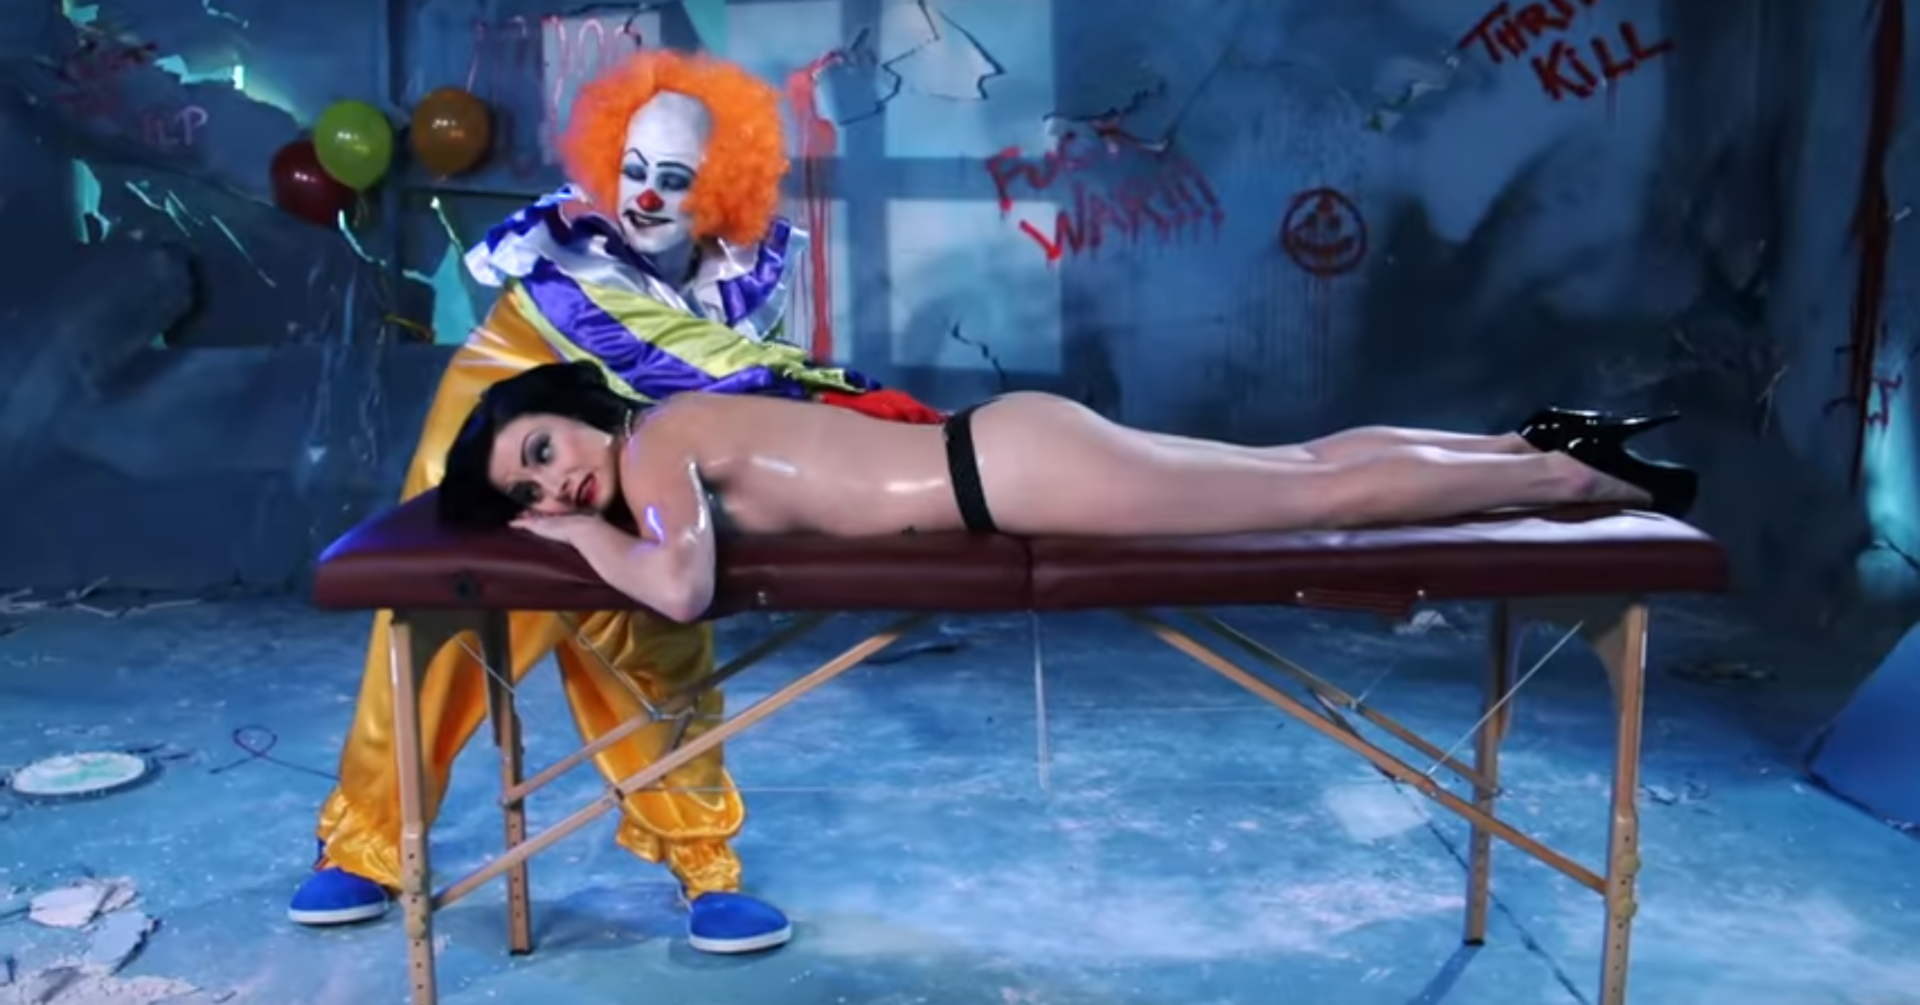 Watch This Hilarious SFW Trailer for a Clown-Themed Porn Movie - Maxim